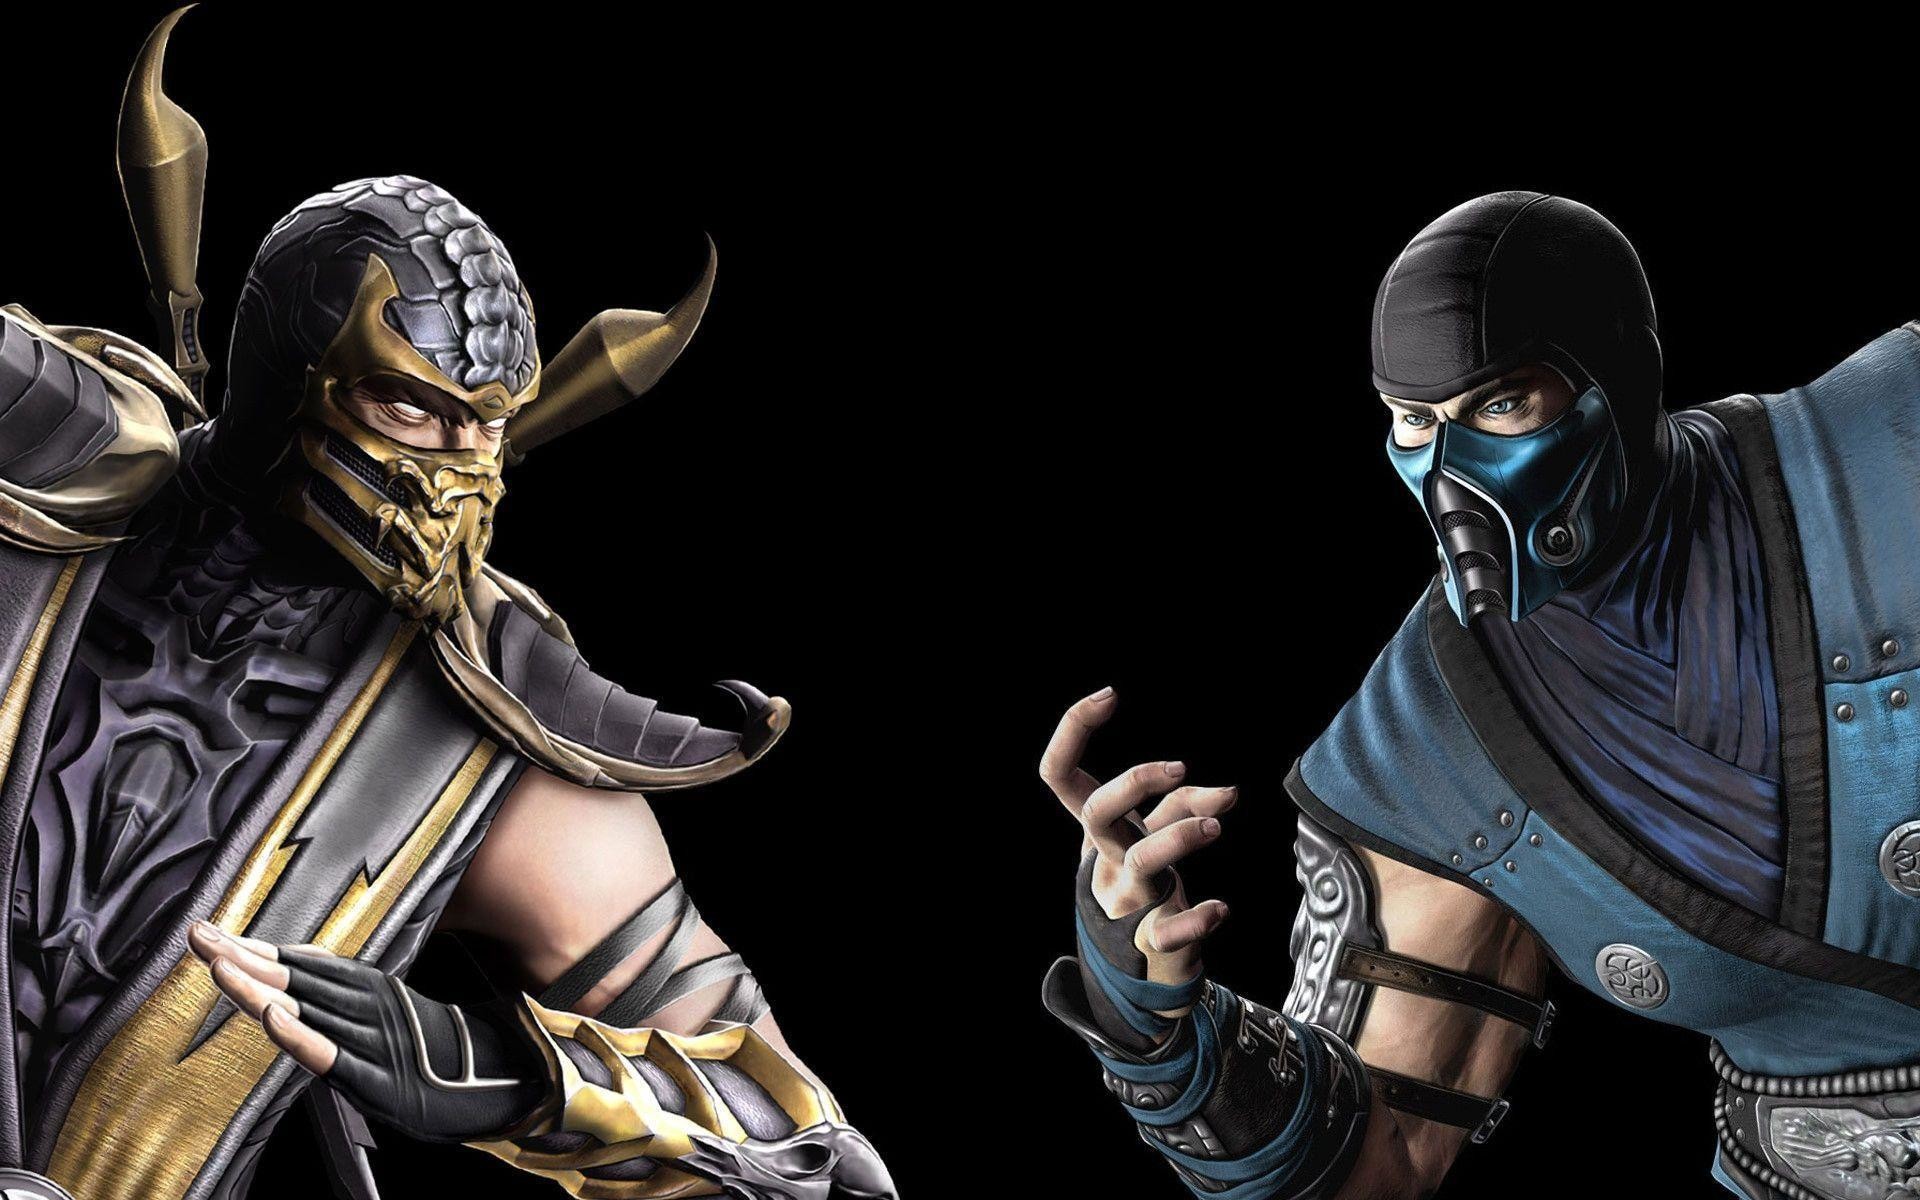 Mortal Kombat Scorpion vs Sub Zero Wallpaper ·① WallpaperTag